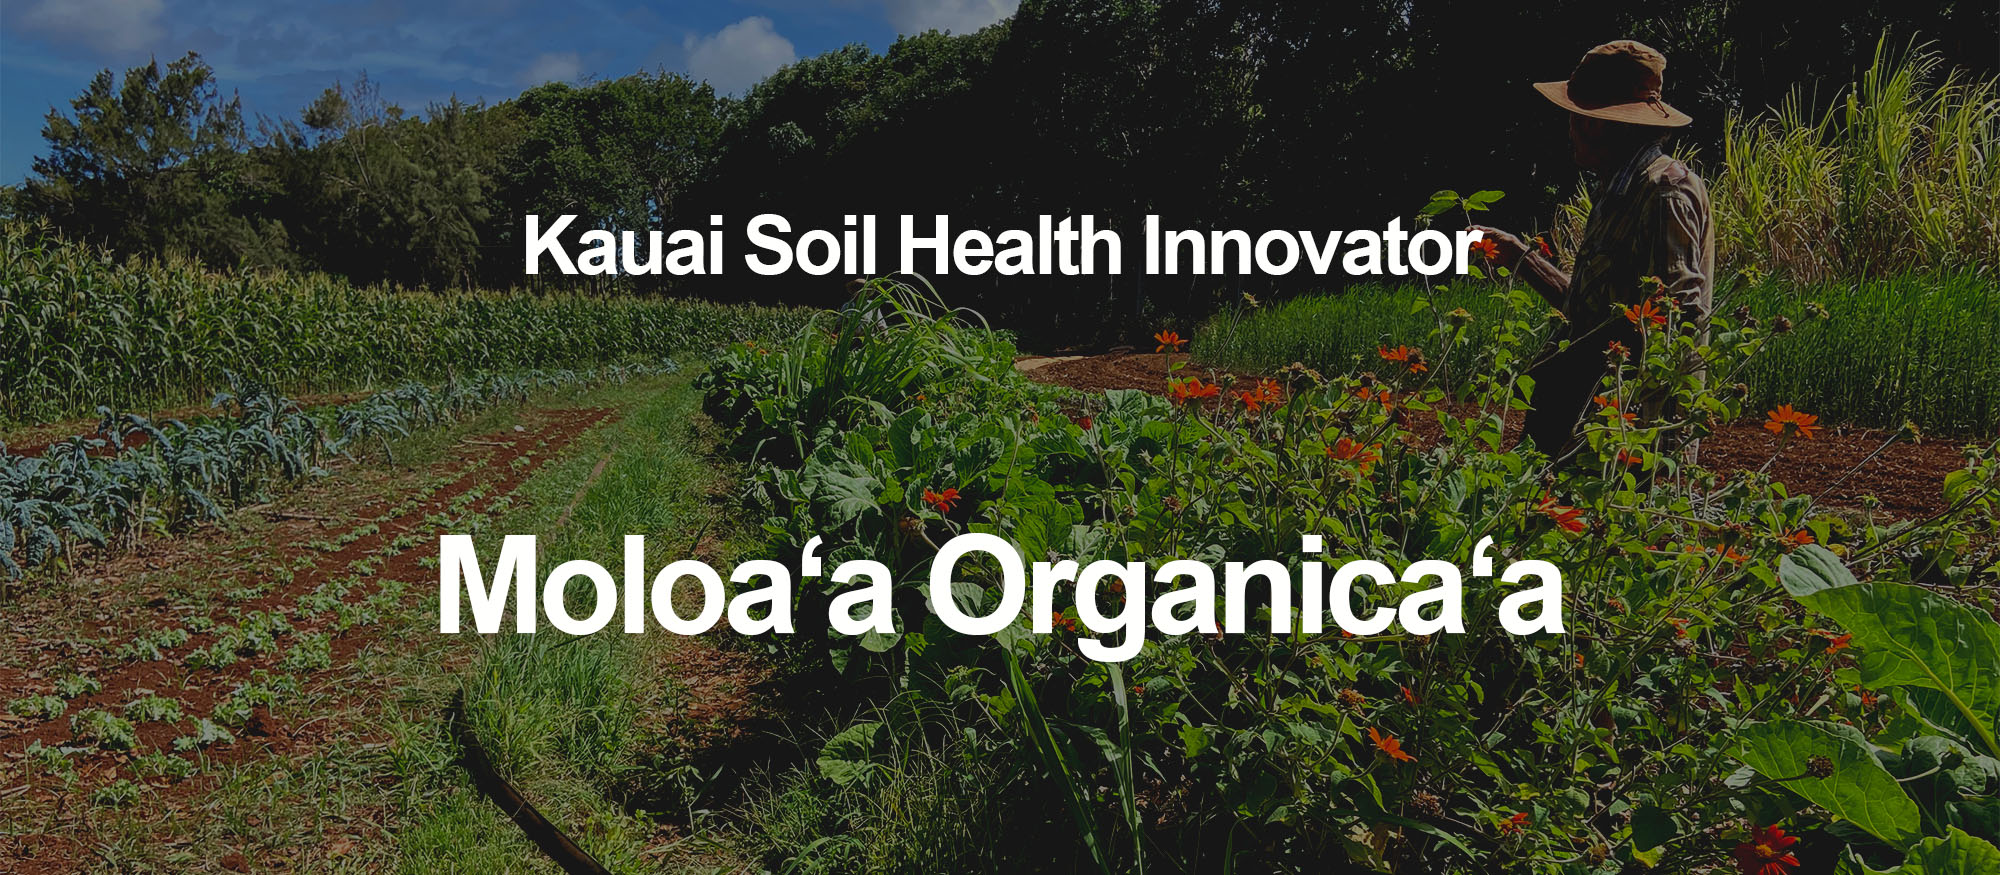 Soil Health Innovator Cover 2 Moloaa Organicaa